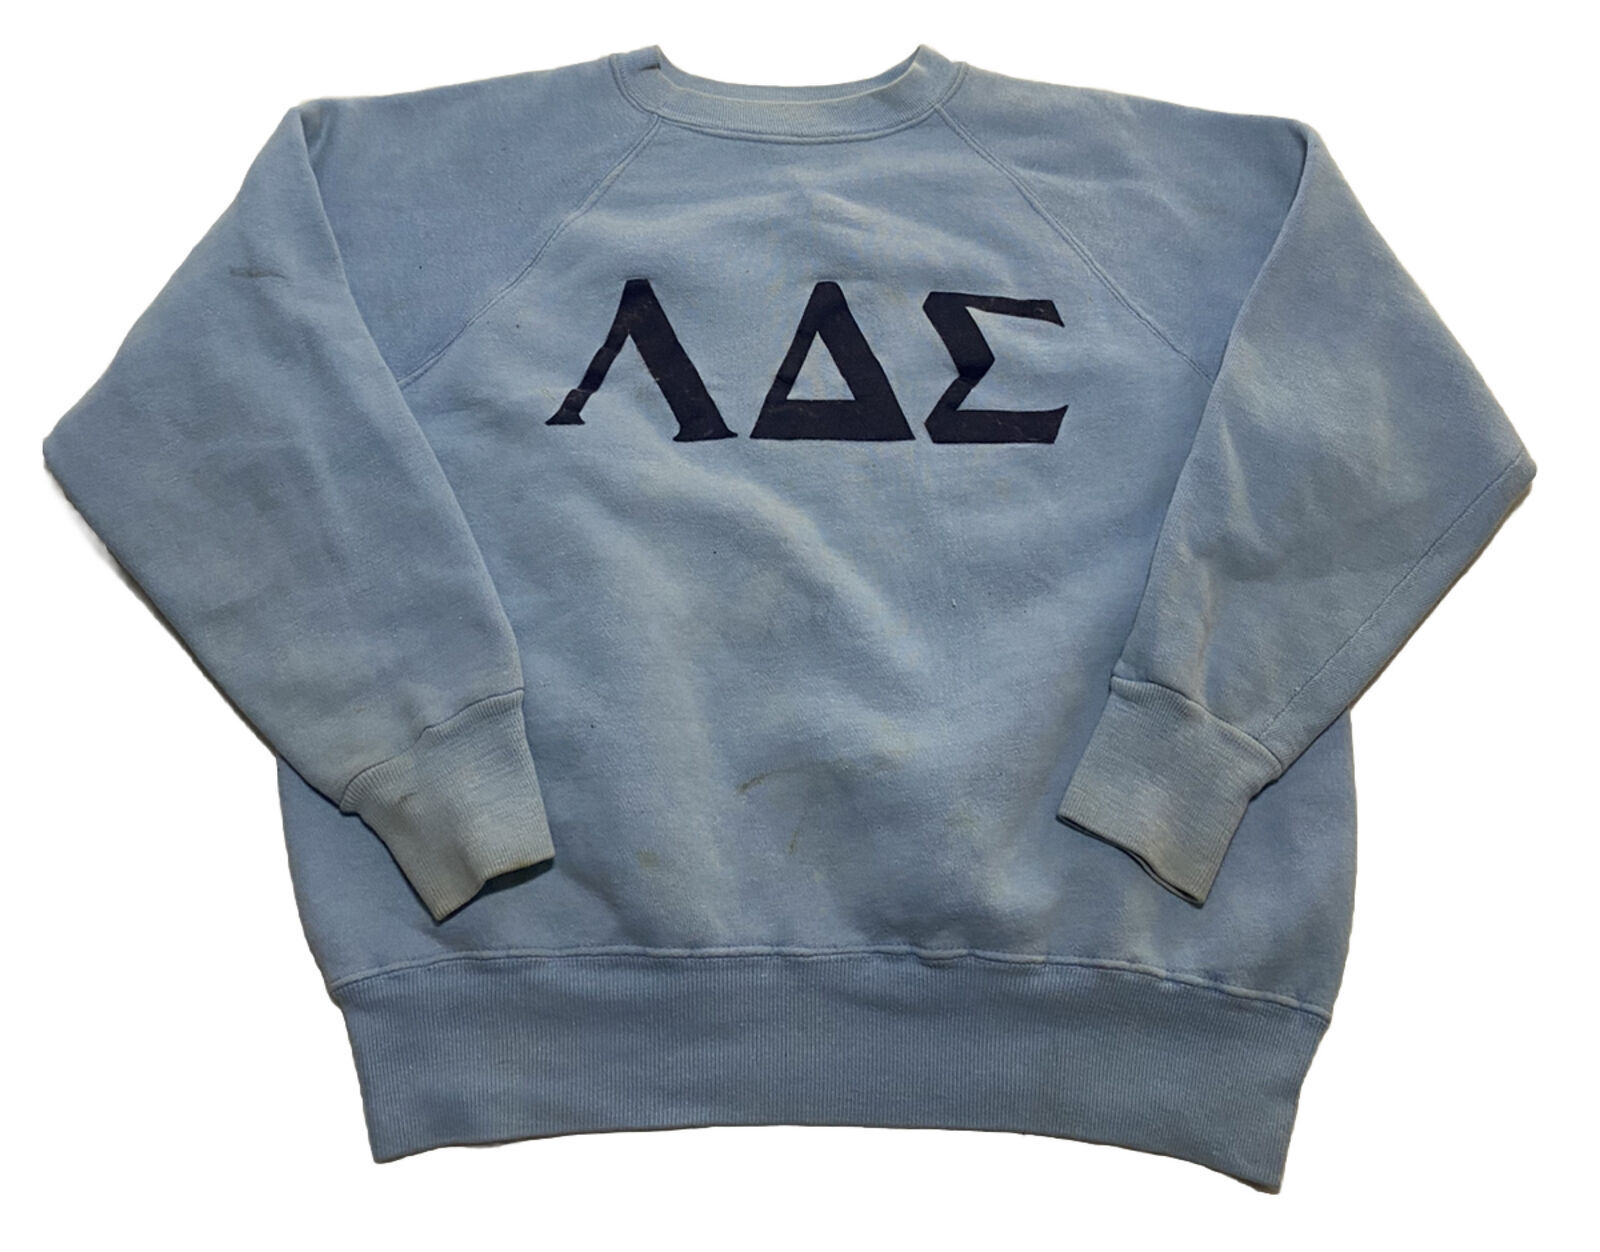 Vintage 1960s Fraternity Sweatshirt Baby Blue 22x22 X3